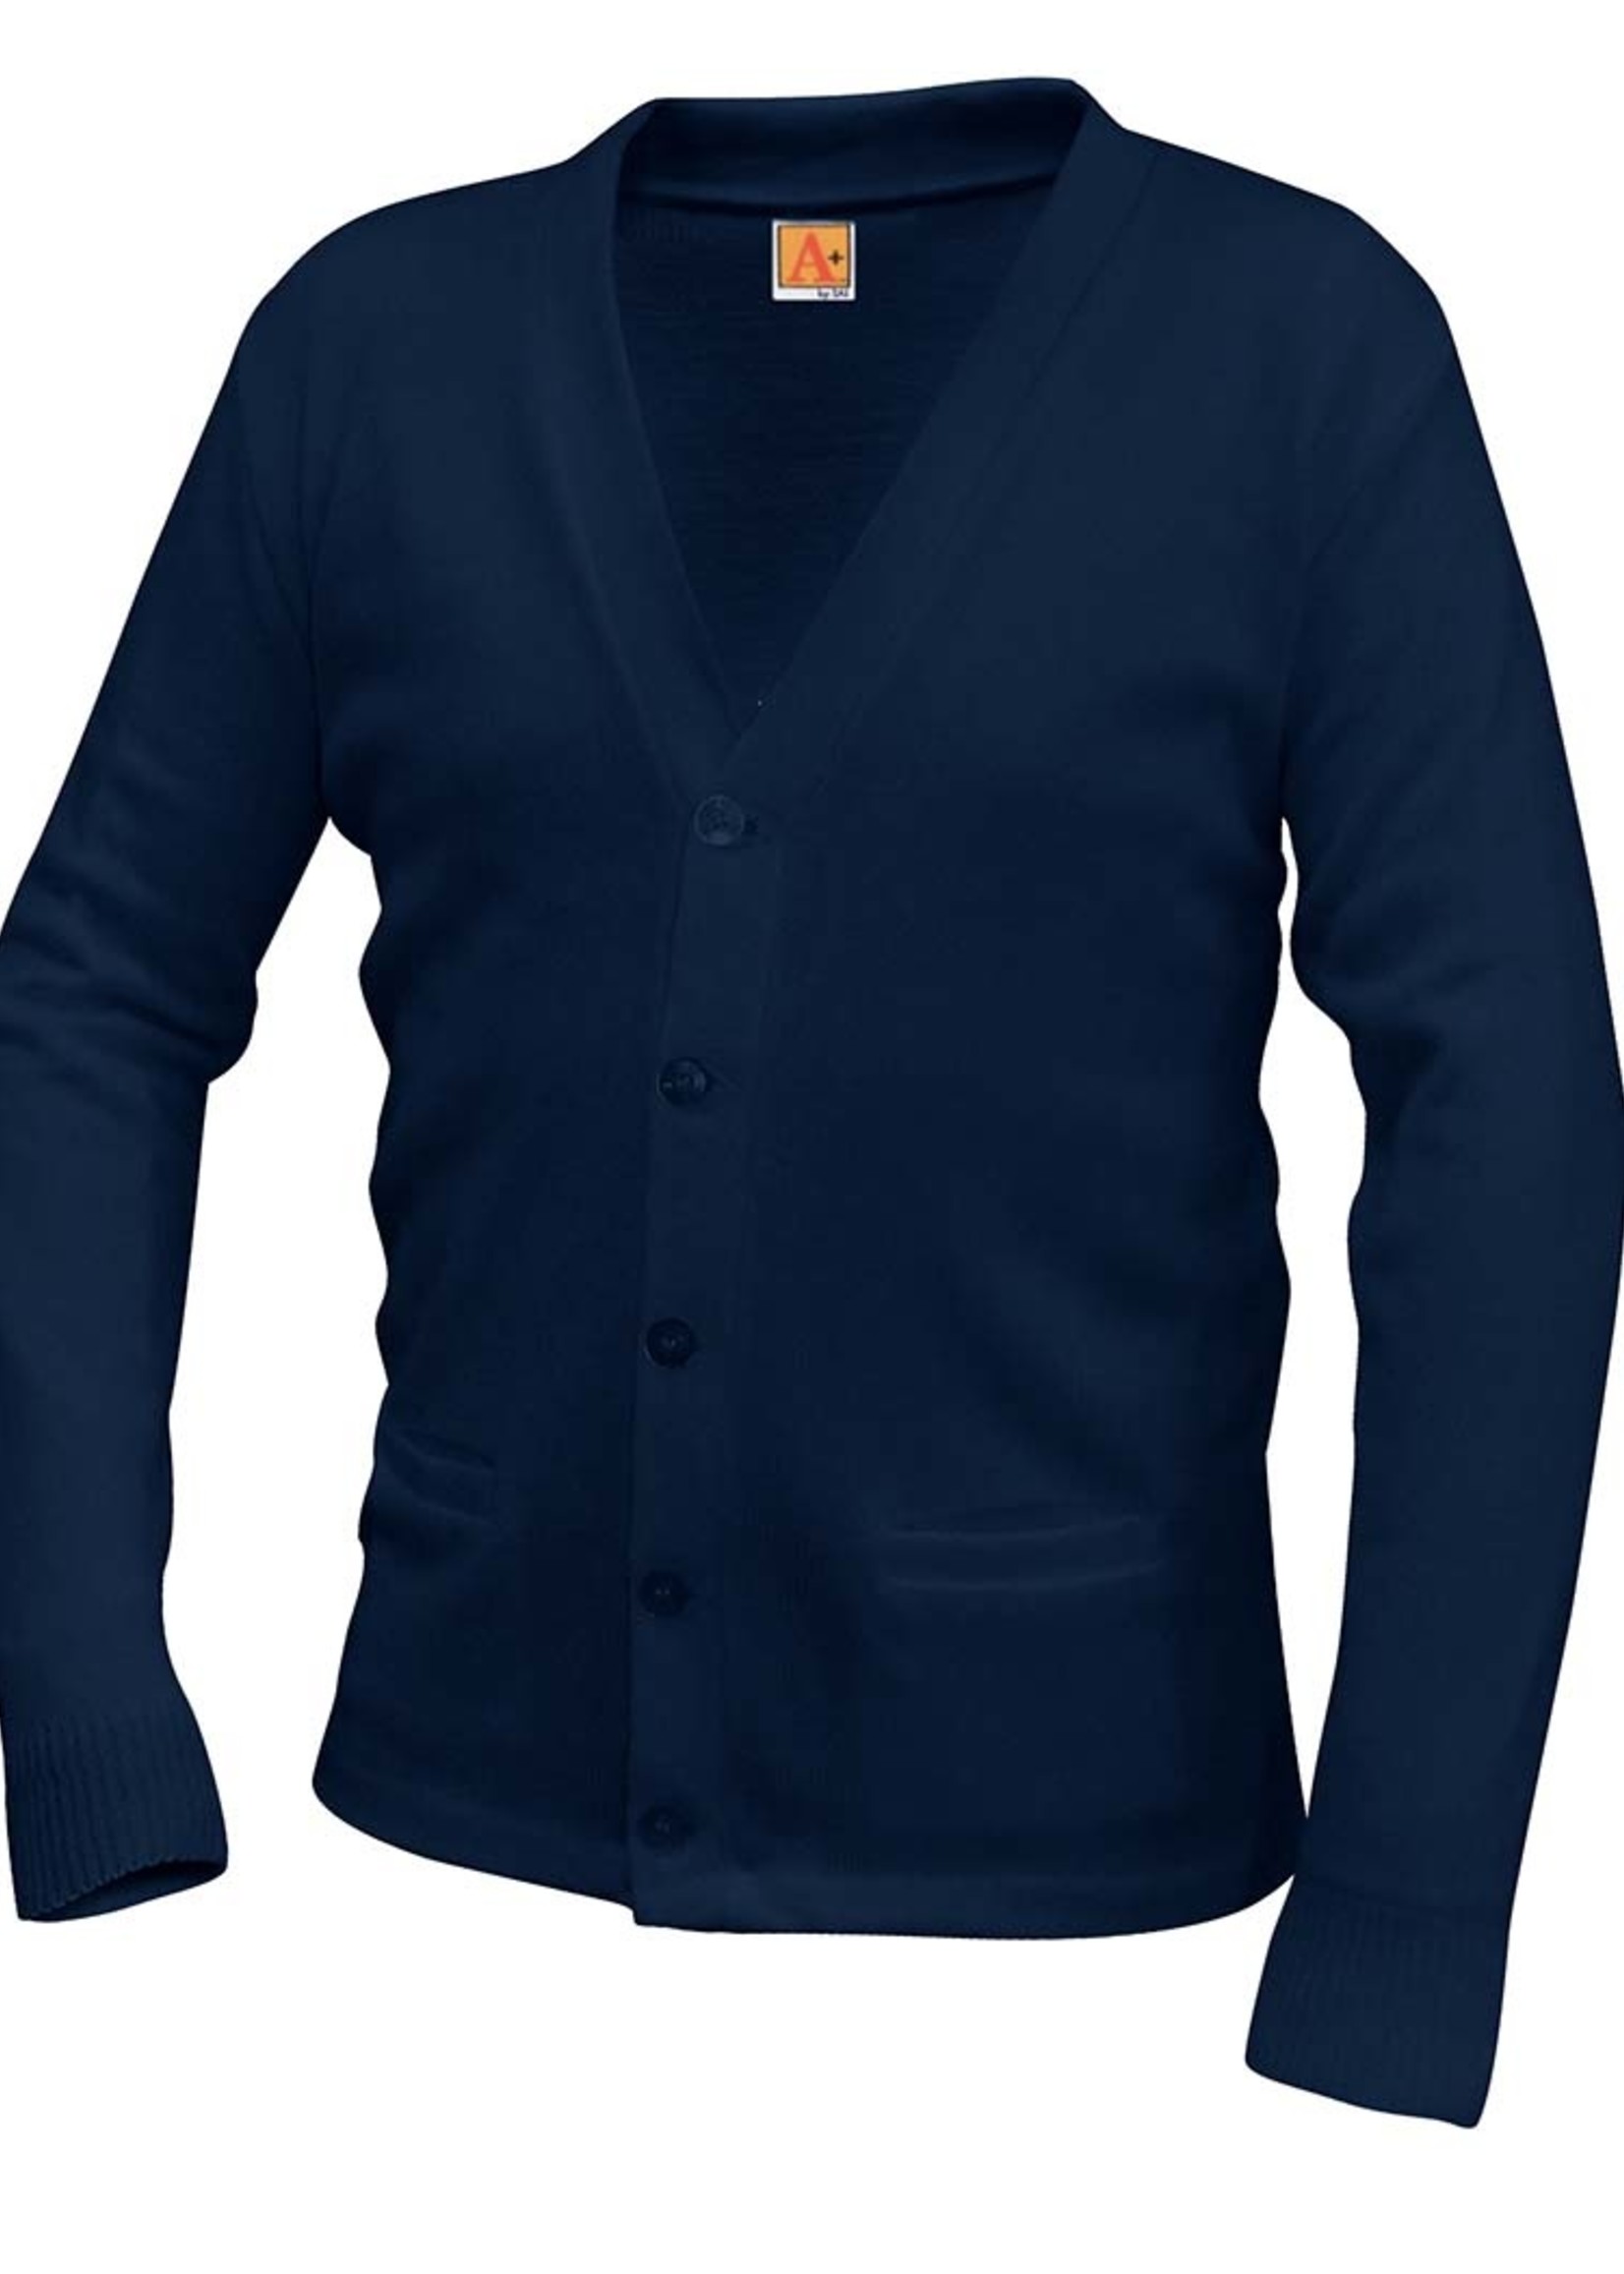 TUS Navy Cardigan V-neck with pocket